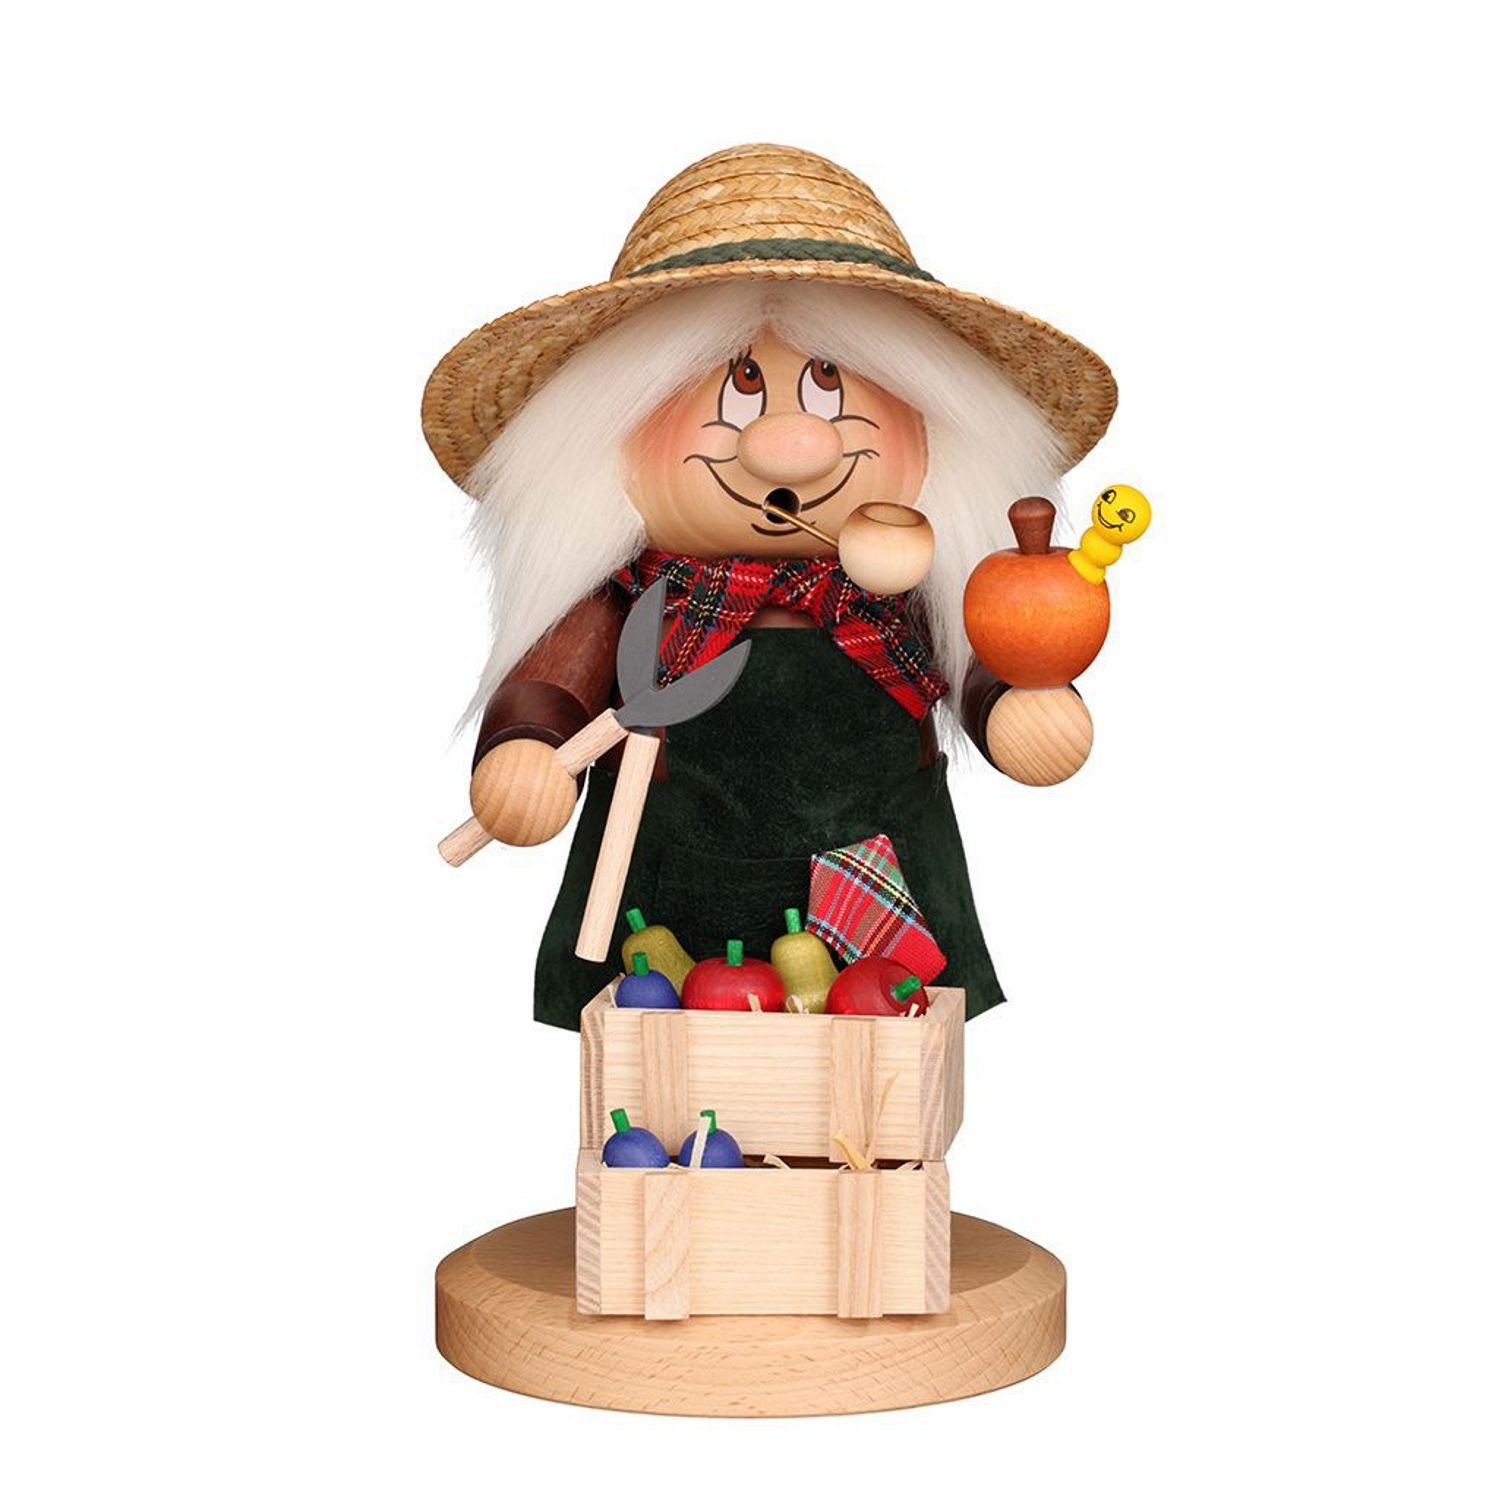 Smoking figure gnome orchard farmer